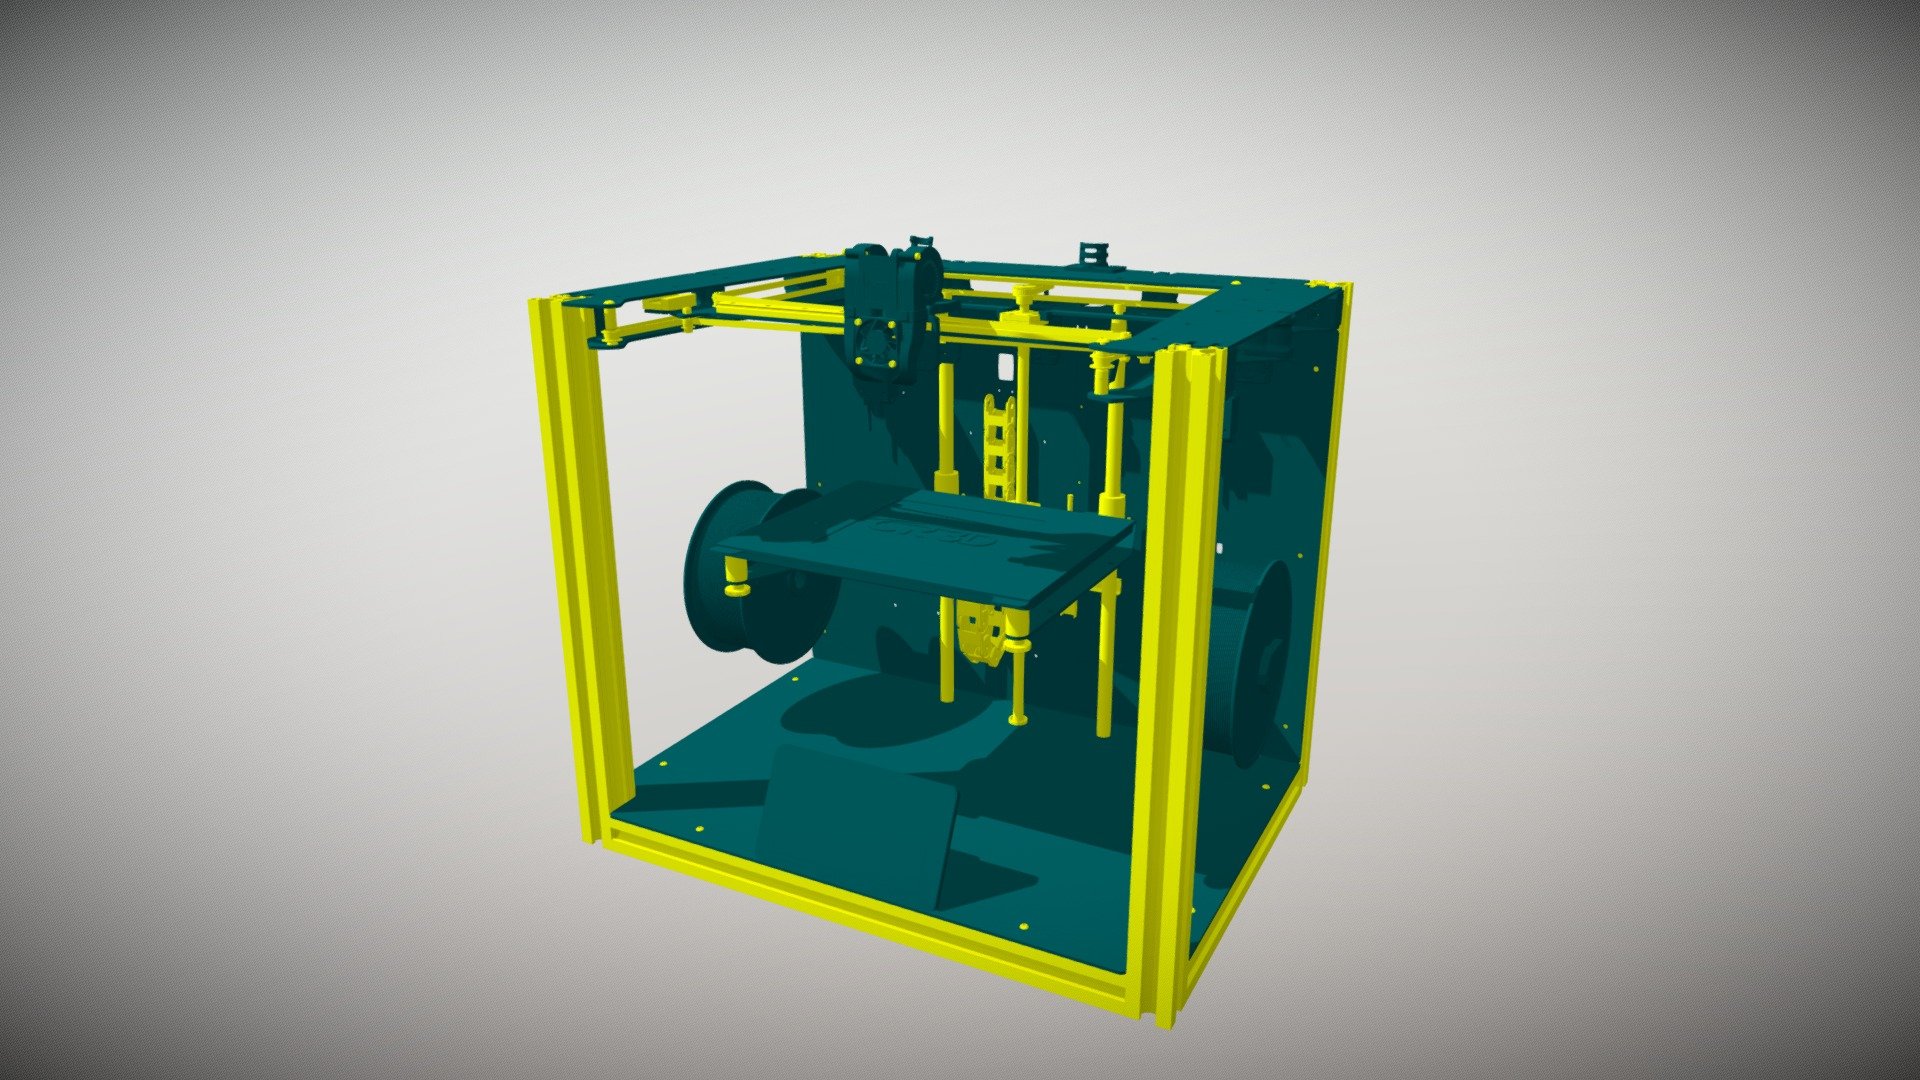 3D-Printer (FFF) by Christian Reil using MISUMI